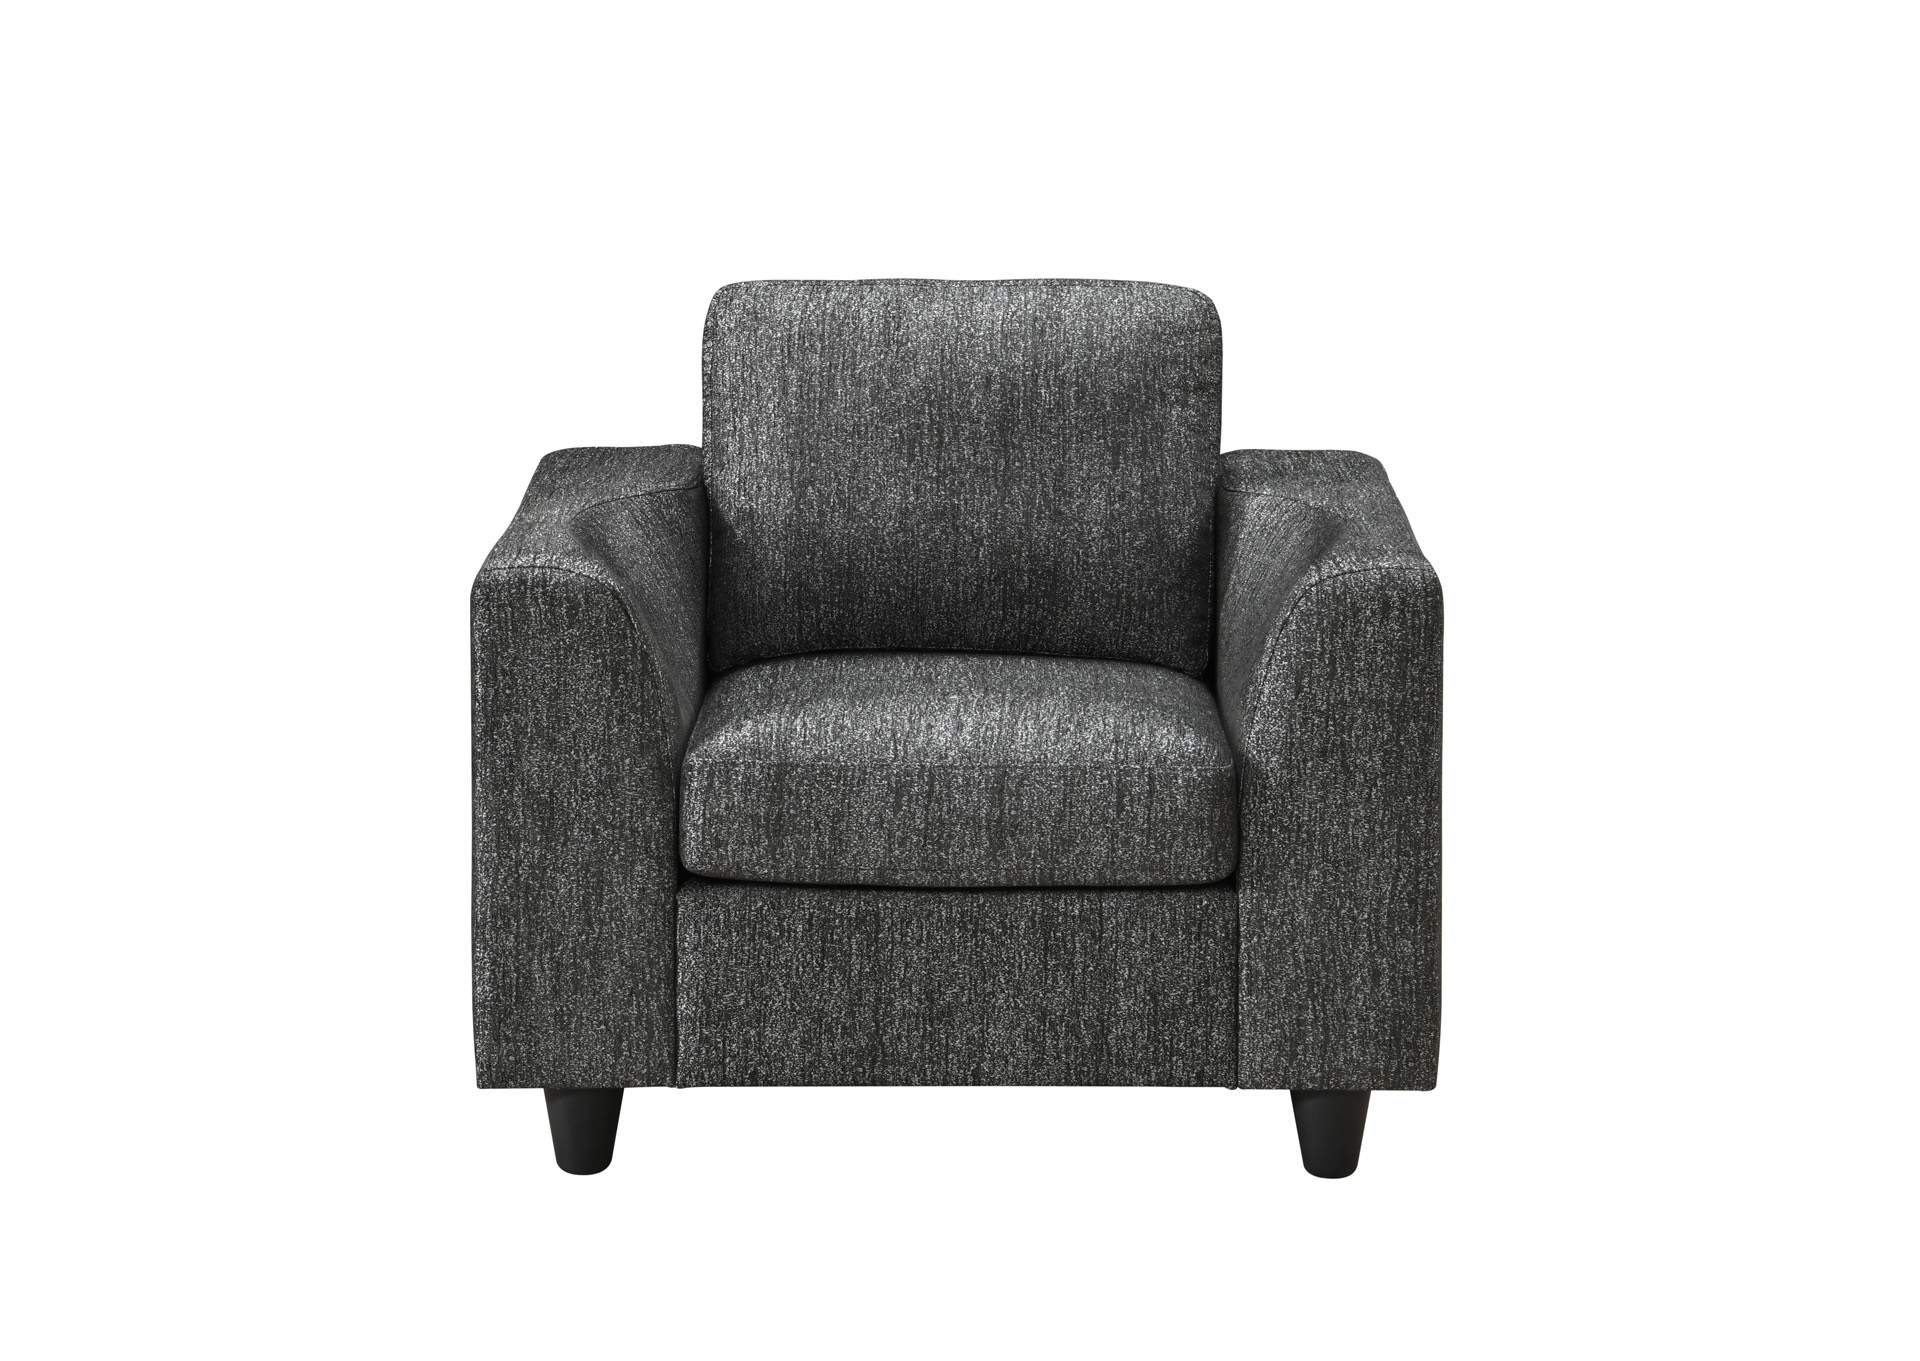 Dark Grey Chair,Global Furniture USA